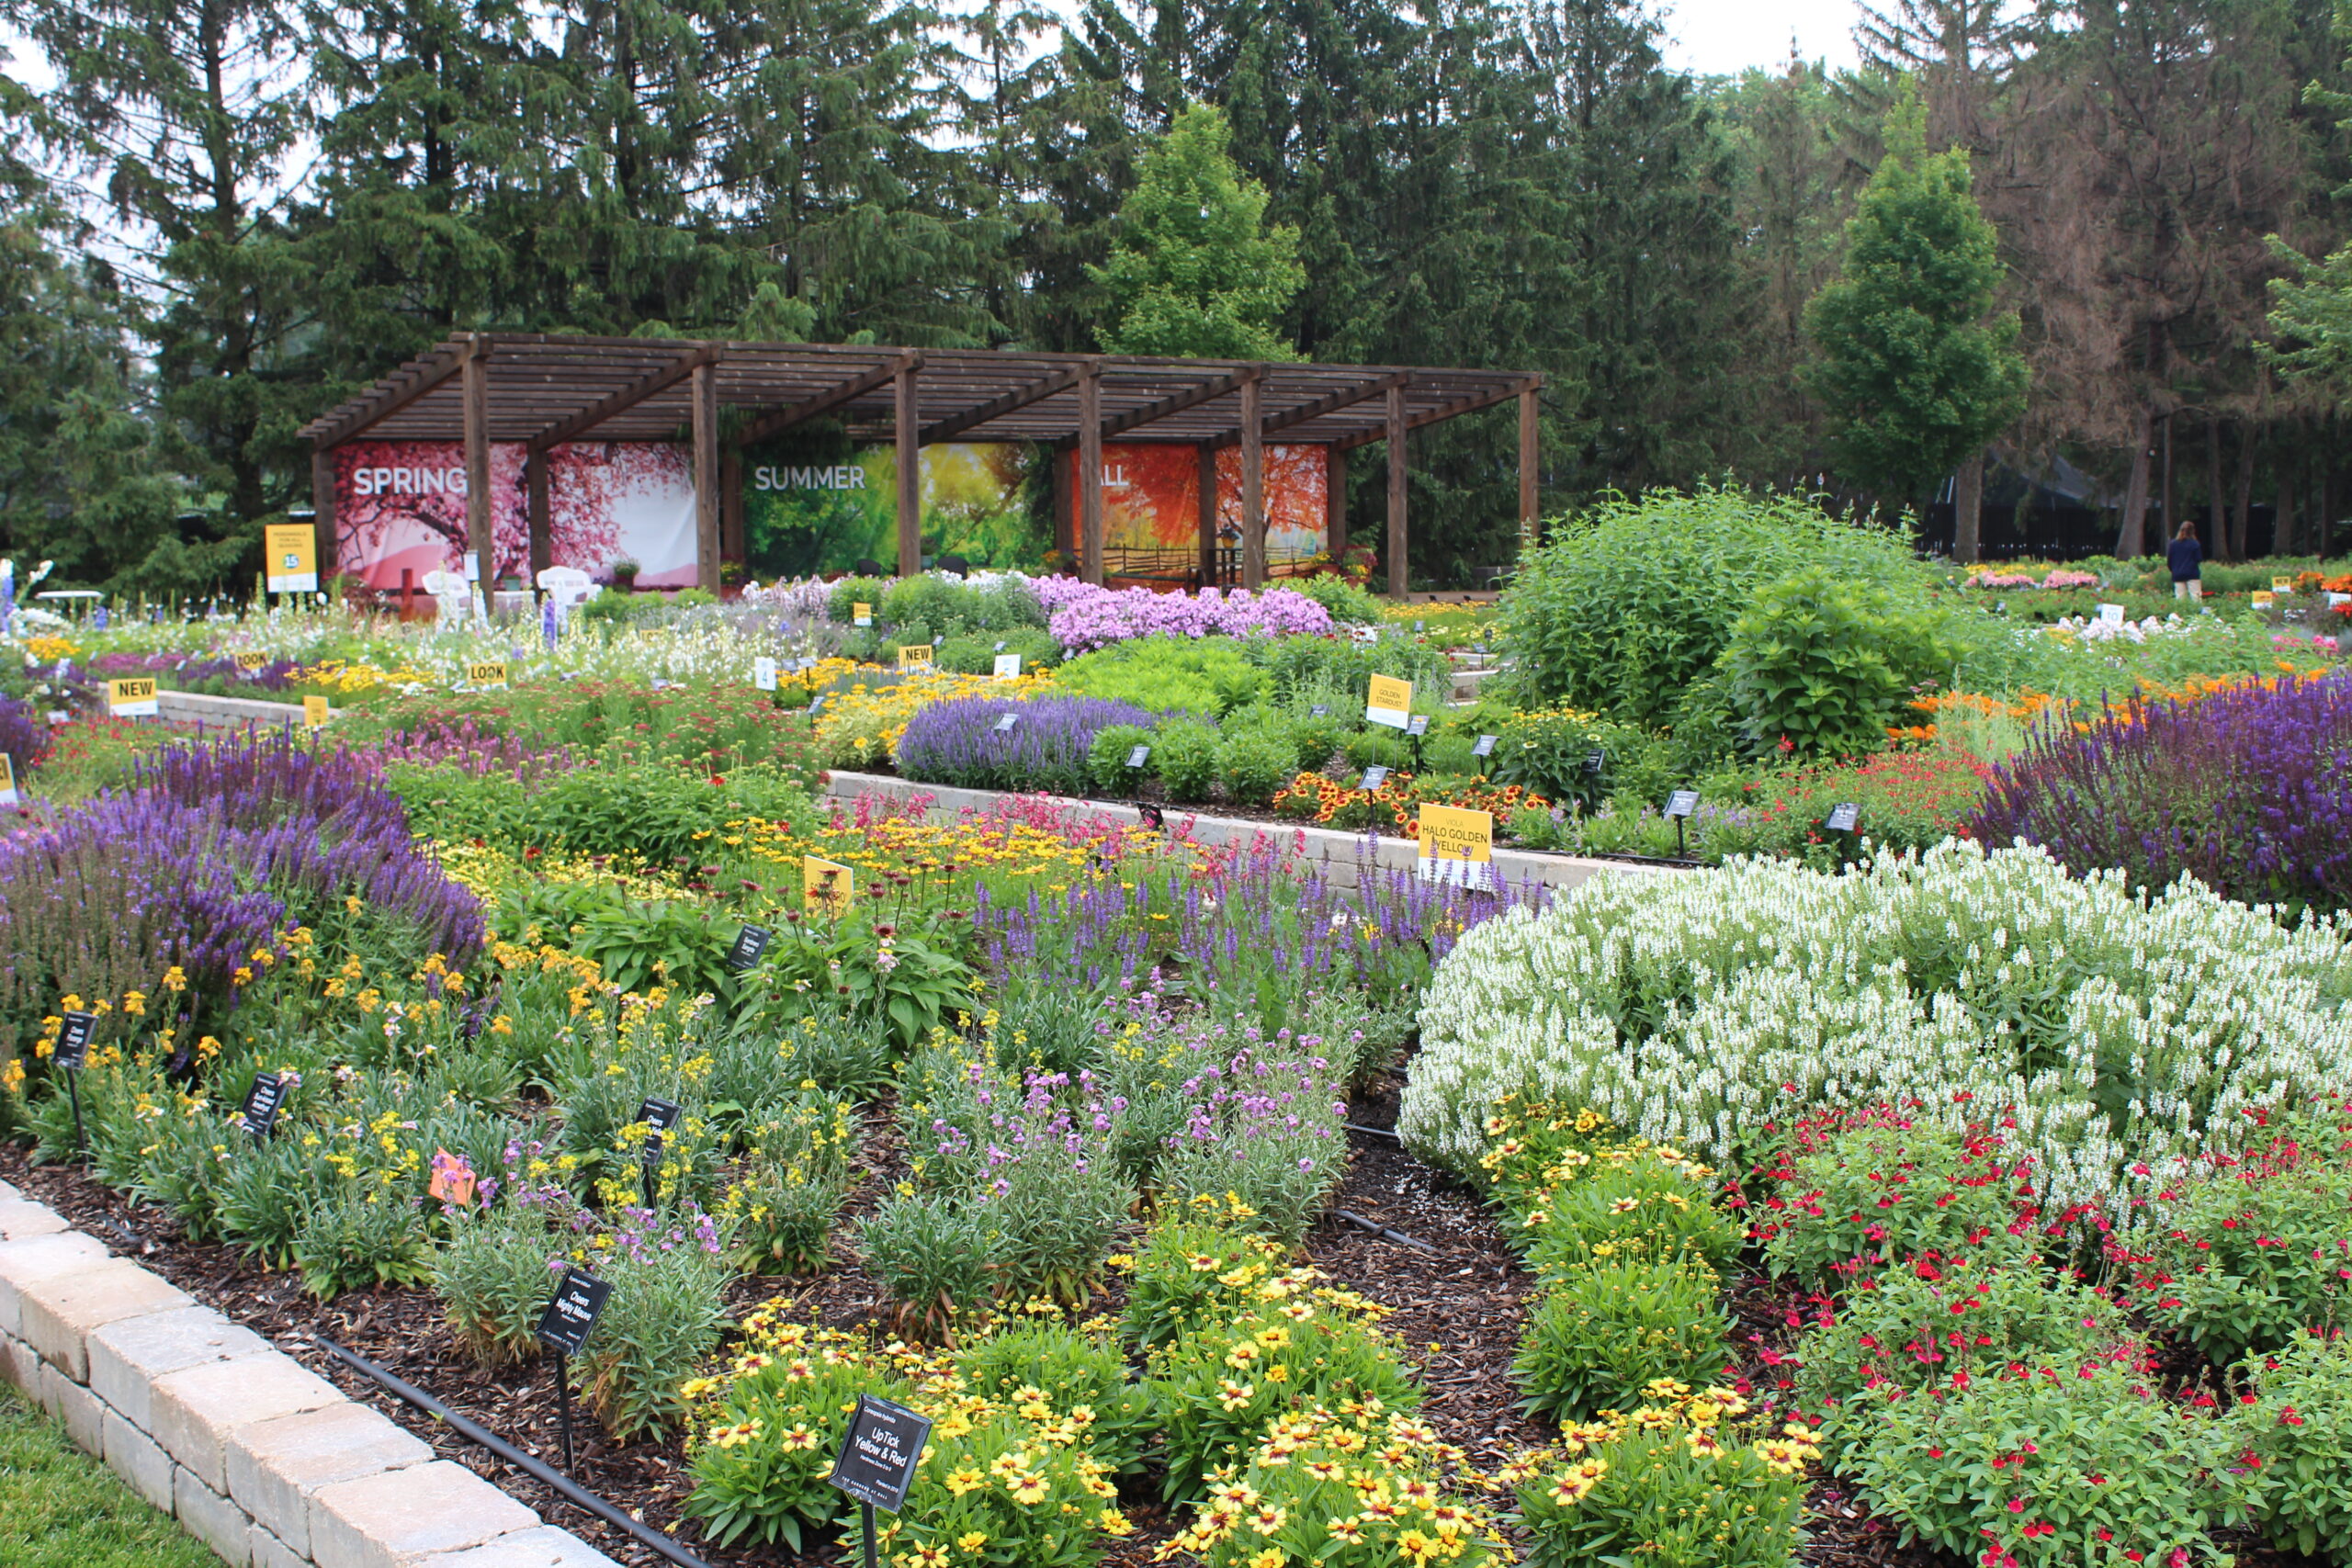 Gardens at Ball Horticultural